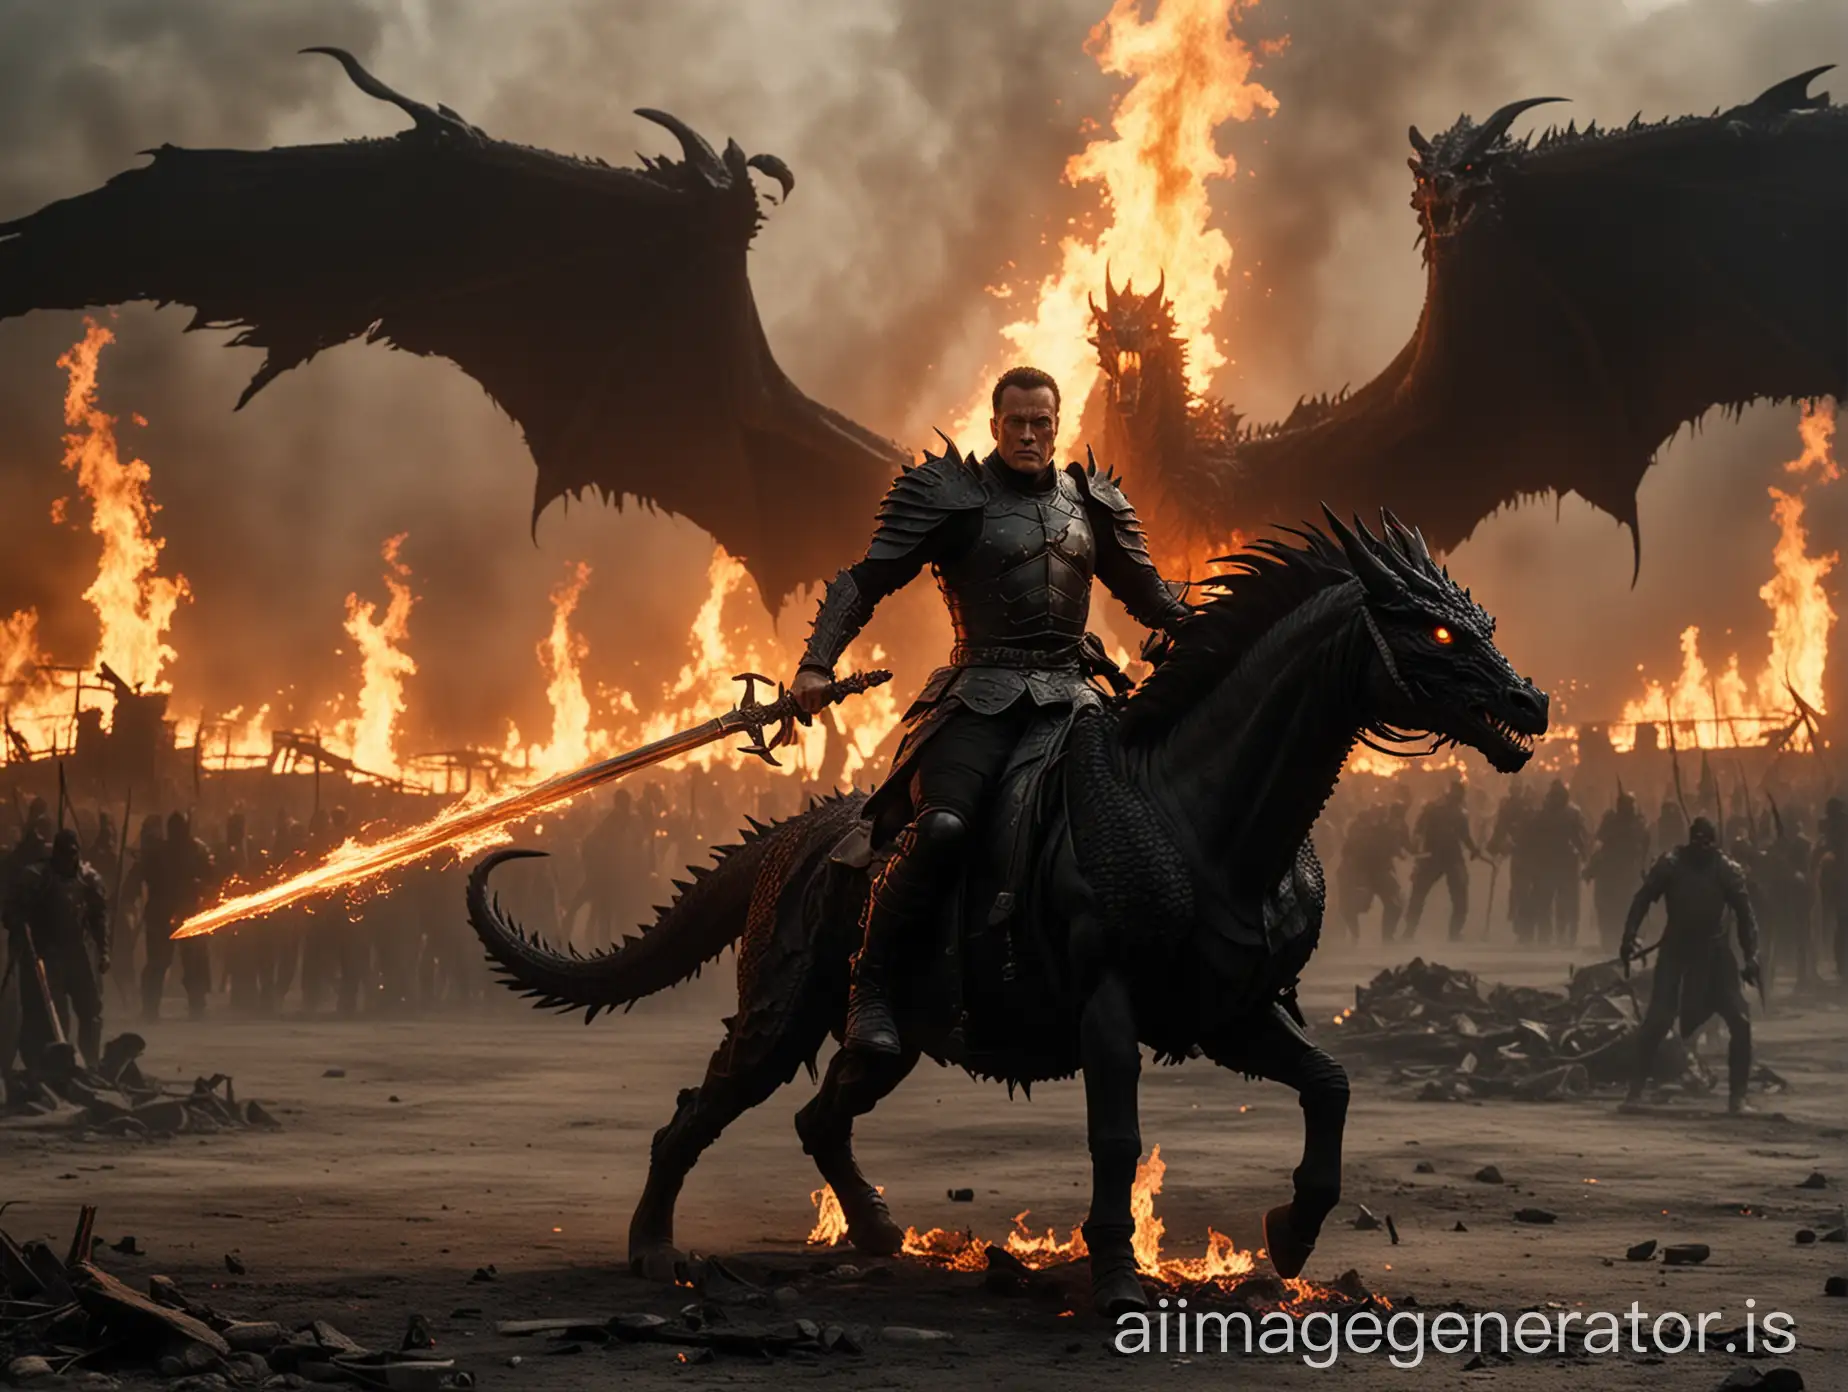 JeanClaude-Van-Damme-Battling-Demon-on-Black-Dragon-with-Flaming-Sword